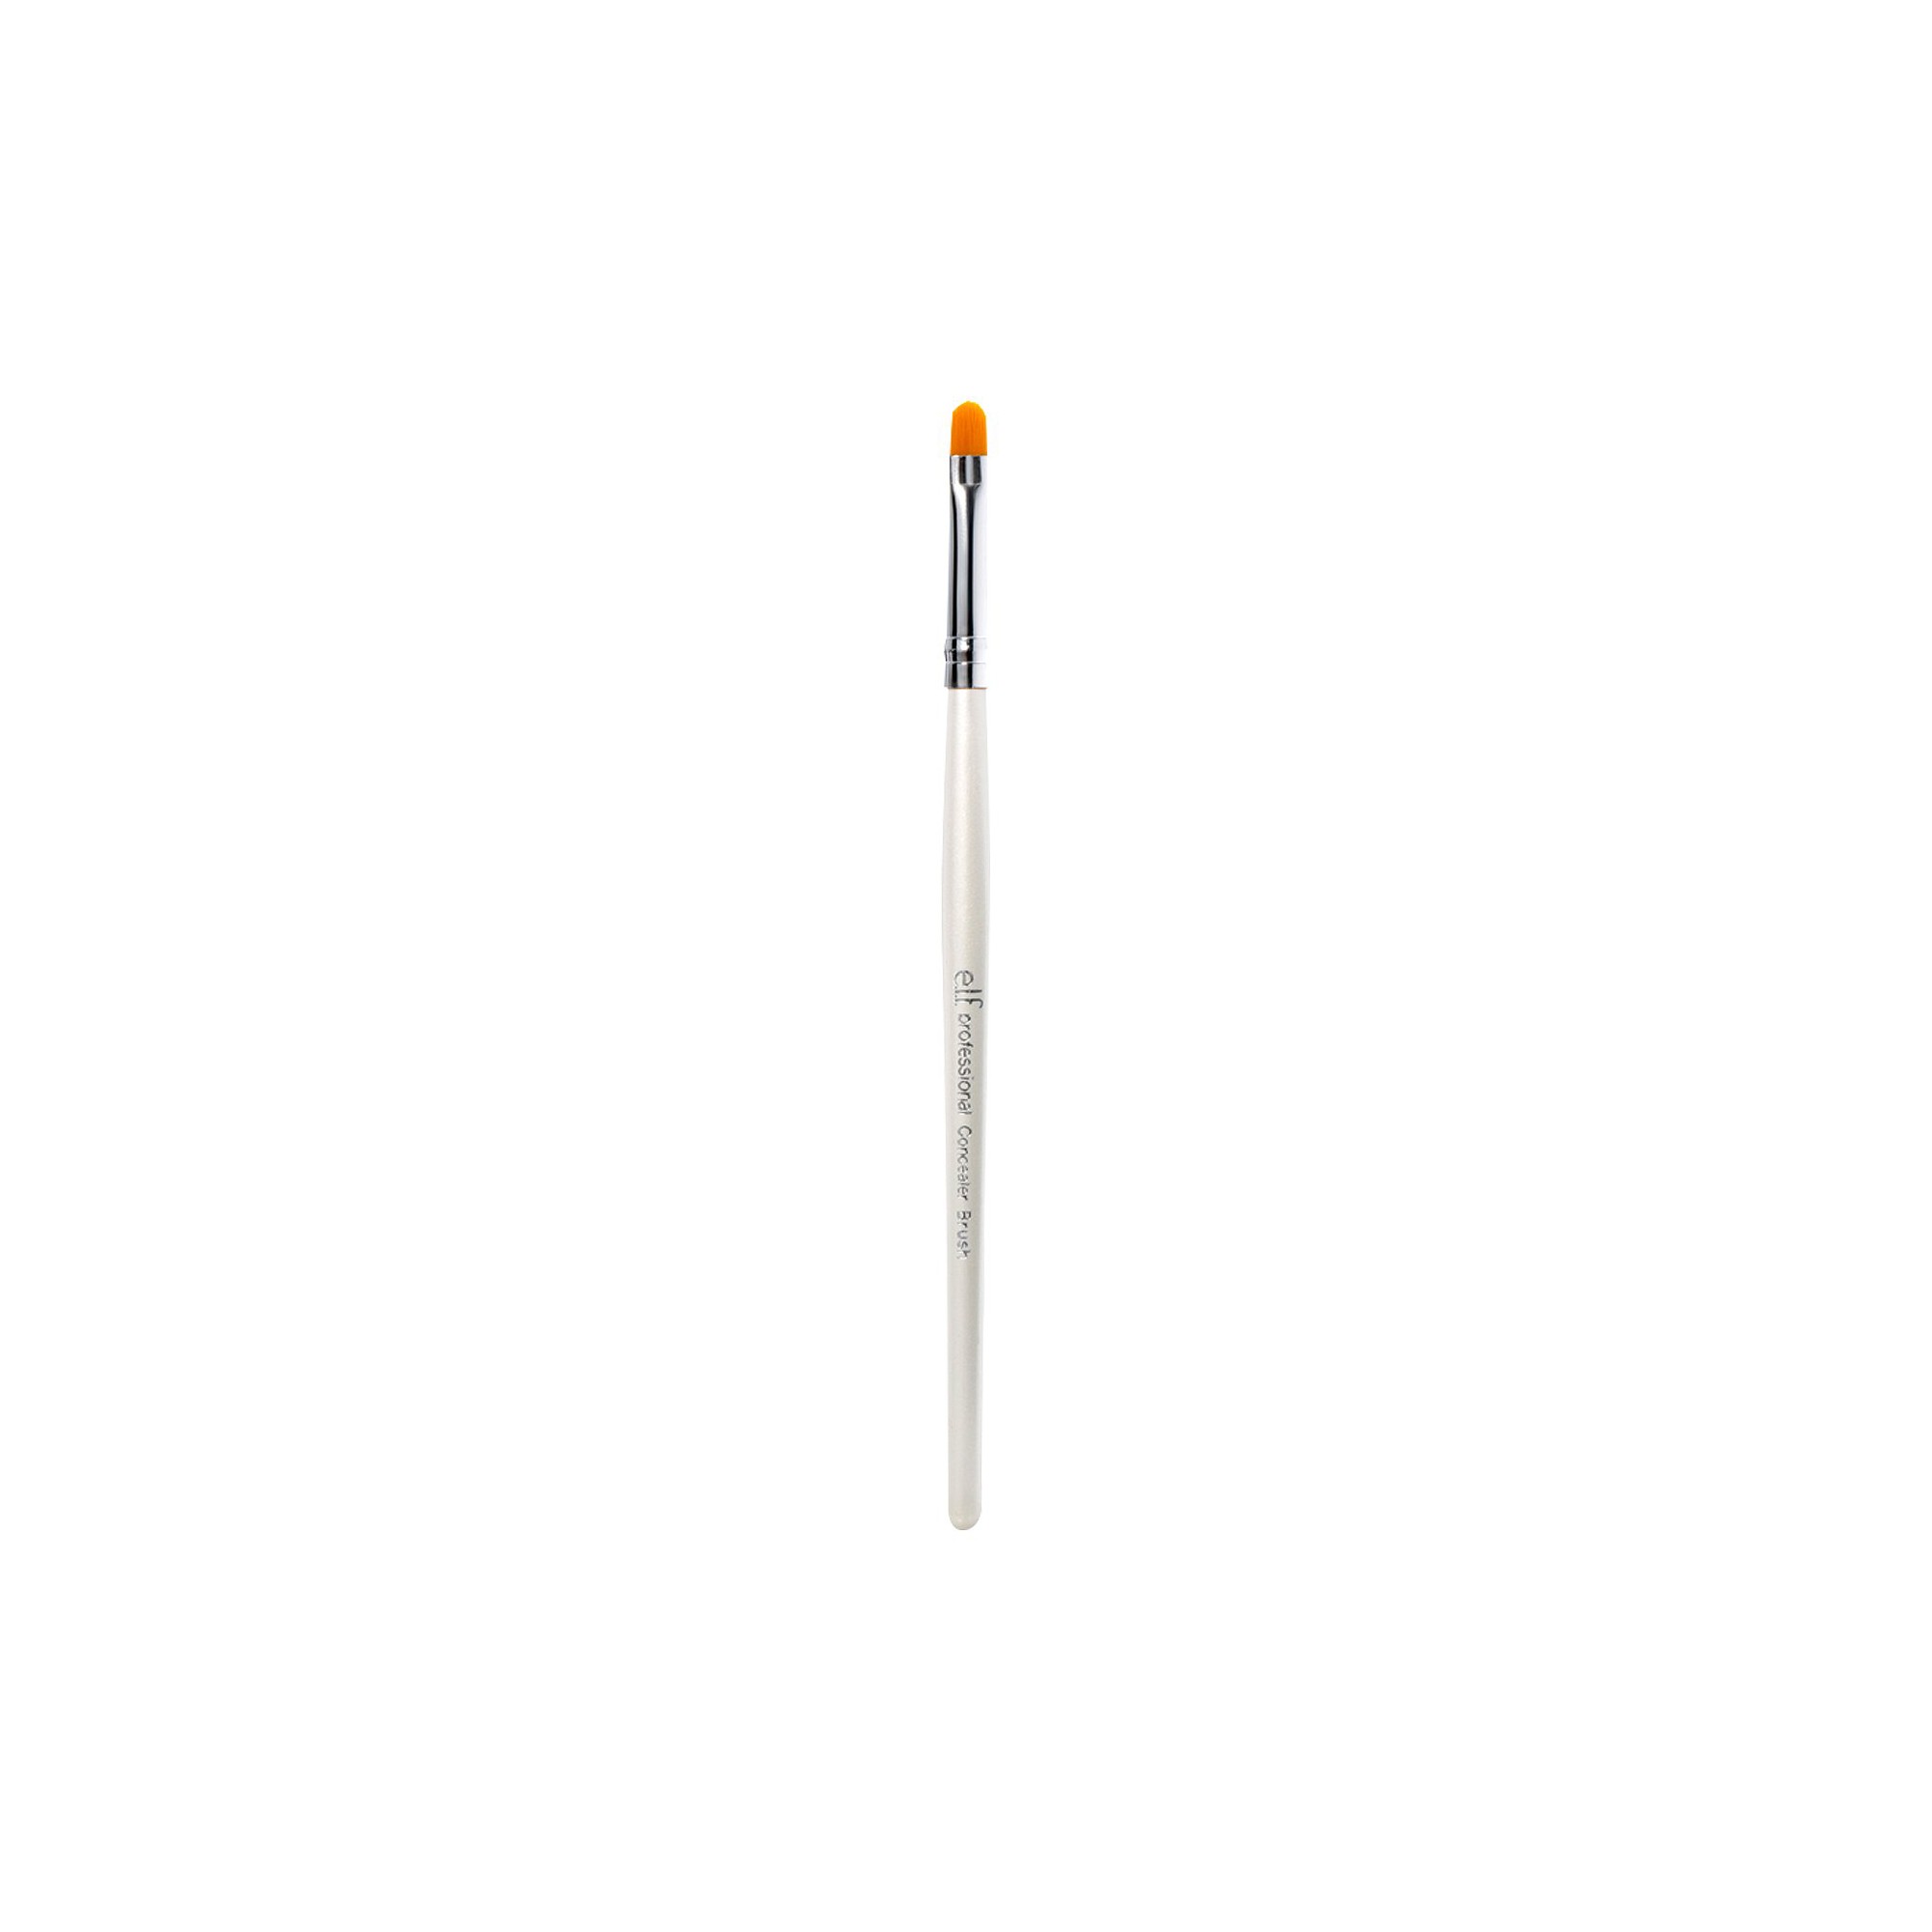 e.l.f. Concealer Brush, makeup brushes and sets